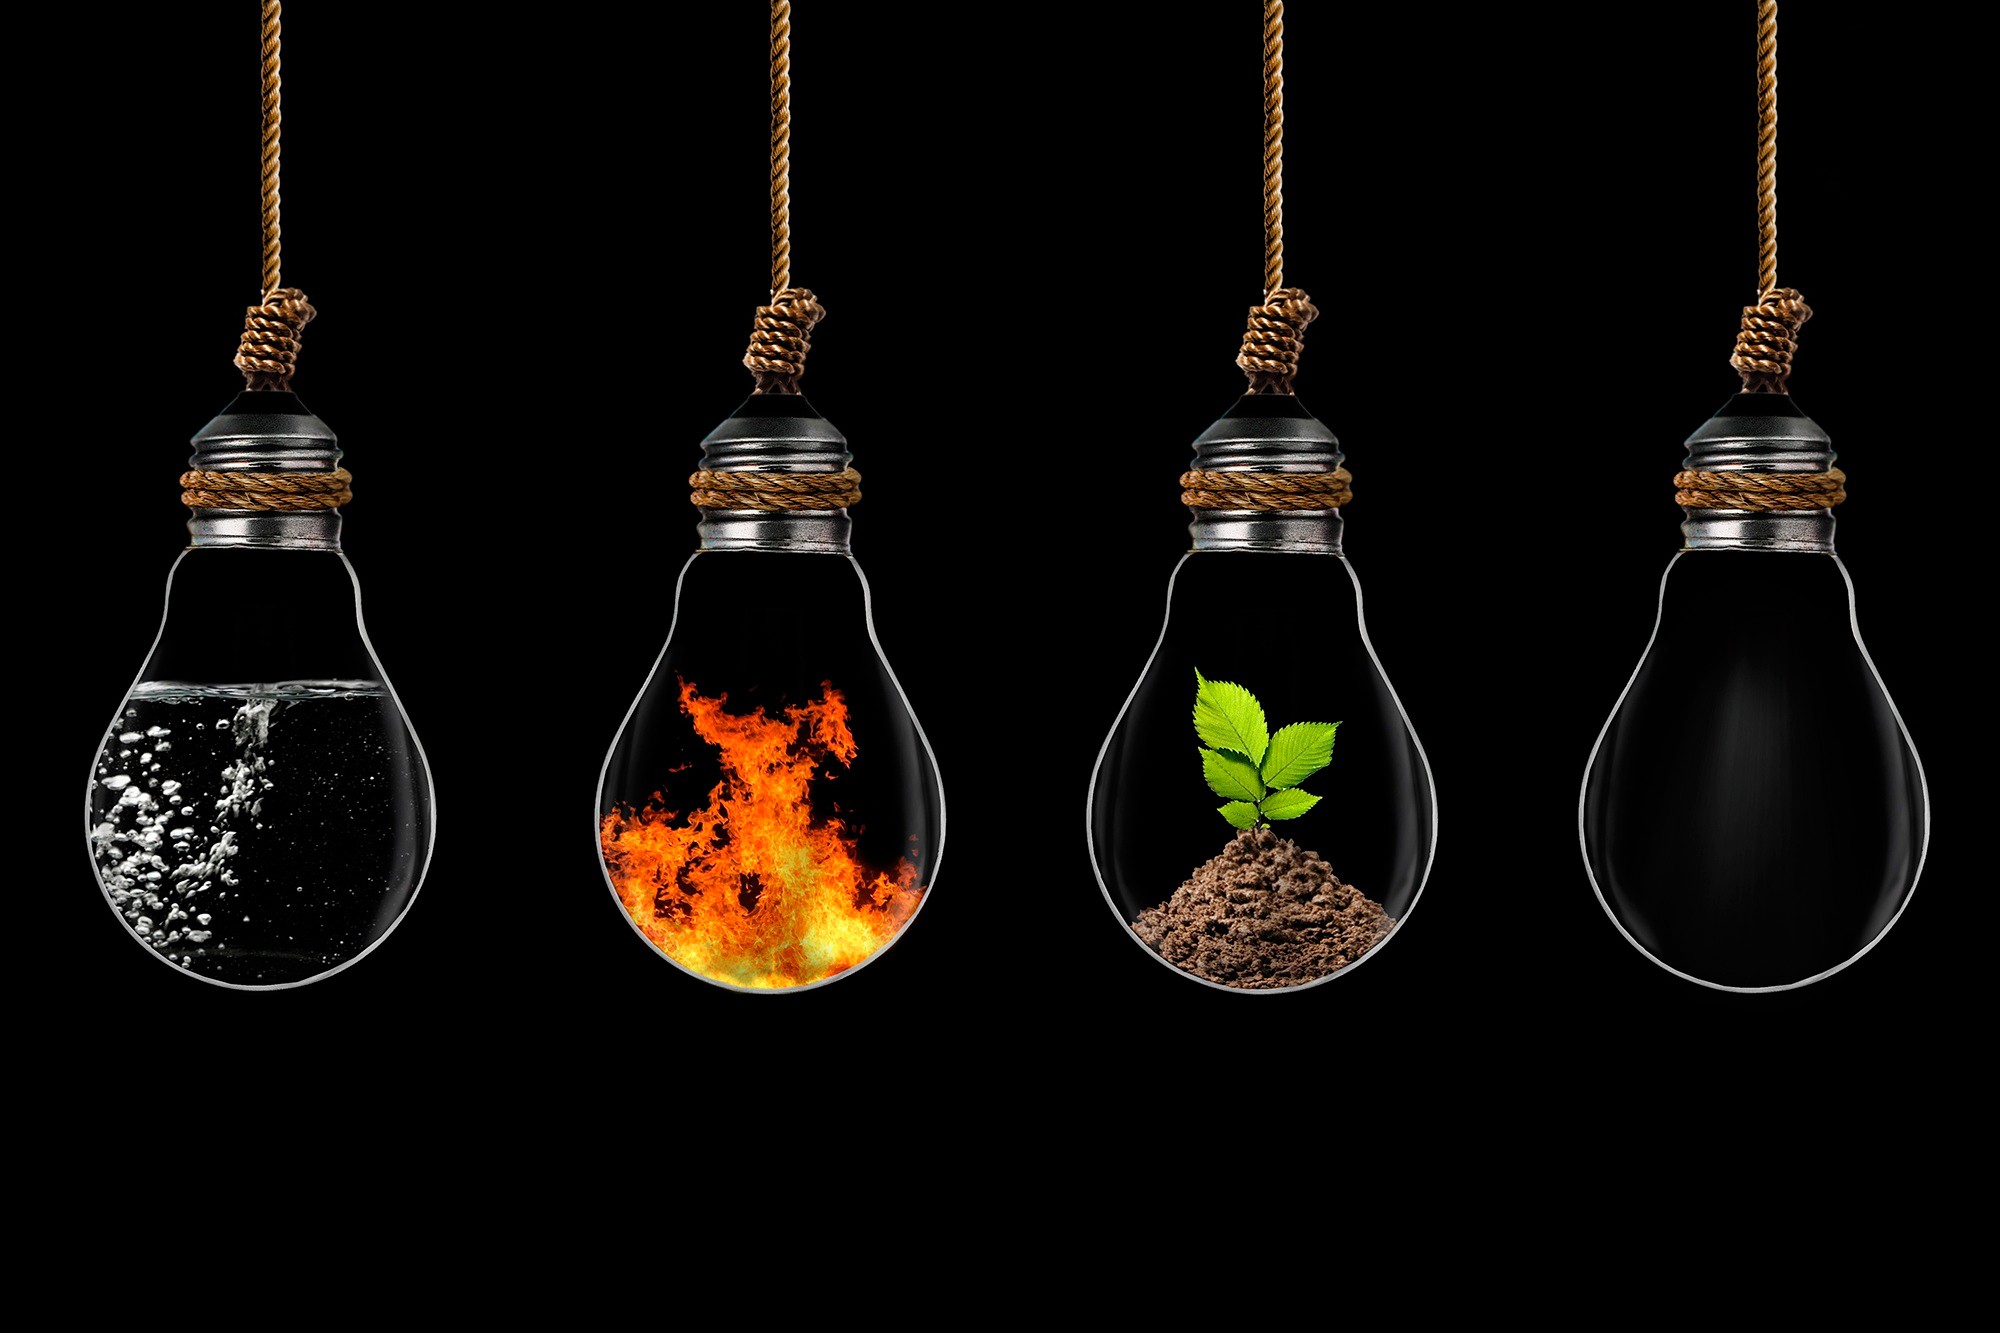 digital Art, Light Bulb, Ropes, Water, Fire, Plants, Ground, Black Background, Four Elements Wallpaper